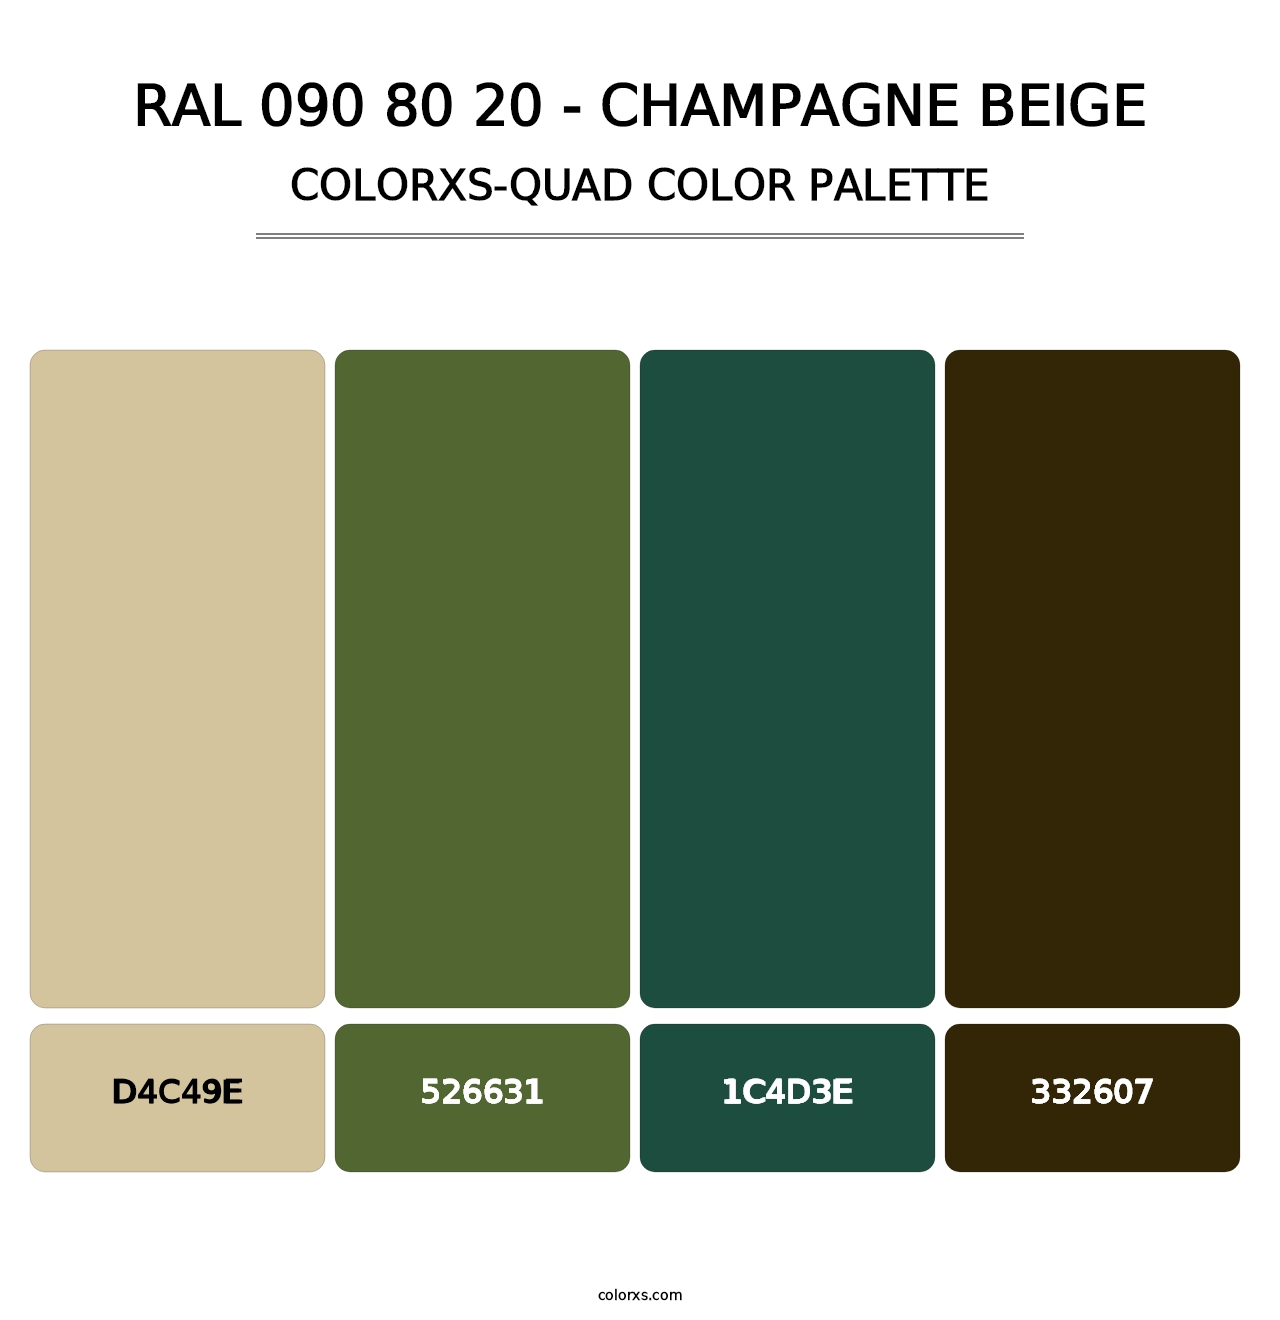 RAL 090 80 20 - Champagne Beige - Colorxs Quad Palette